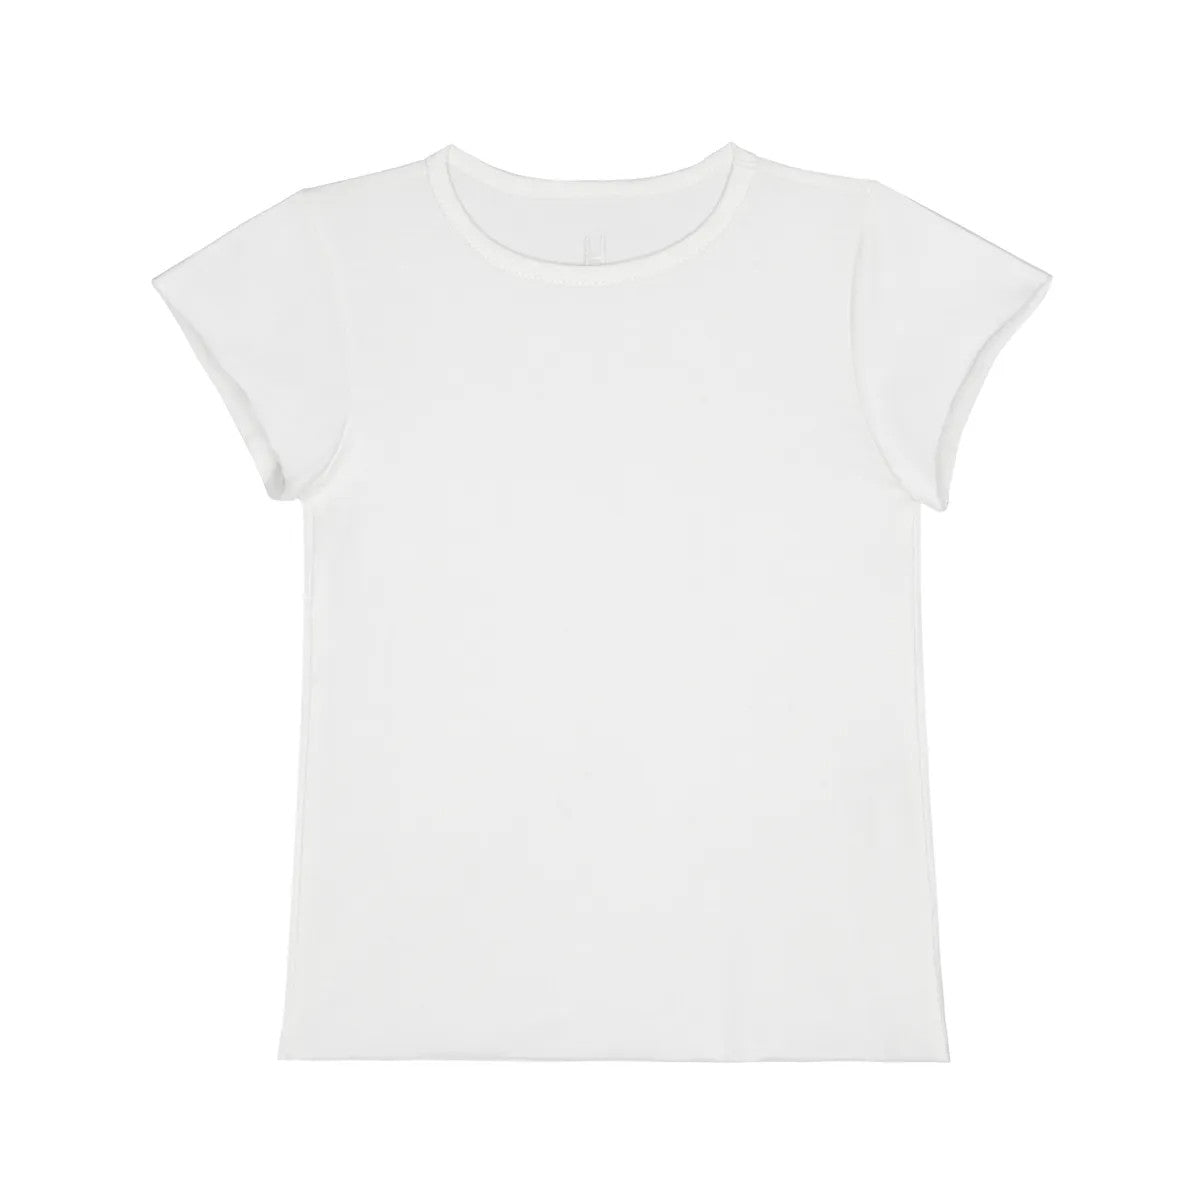 Little Hedonist unisex organic cotton t-shirt in white